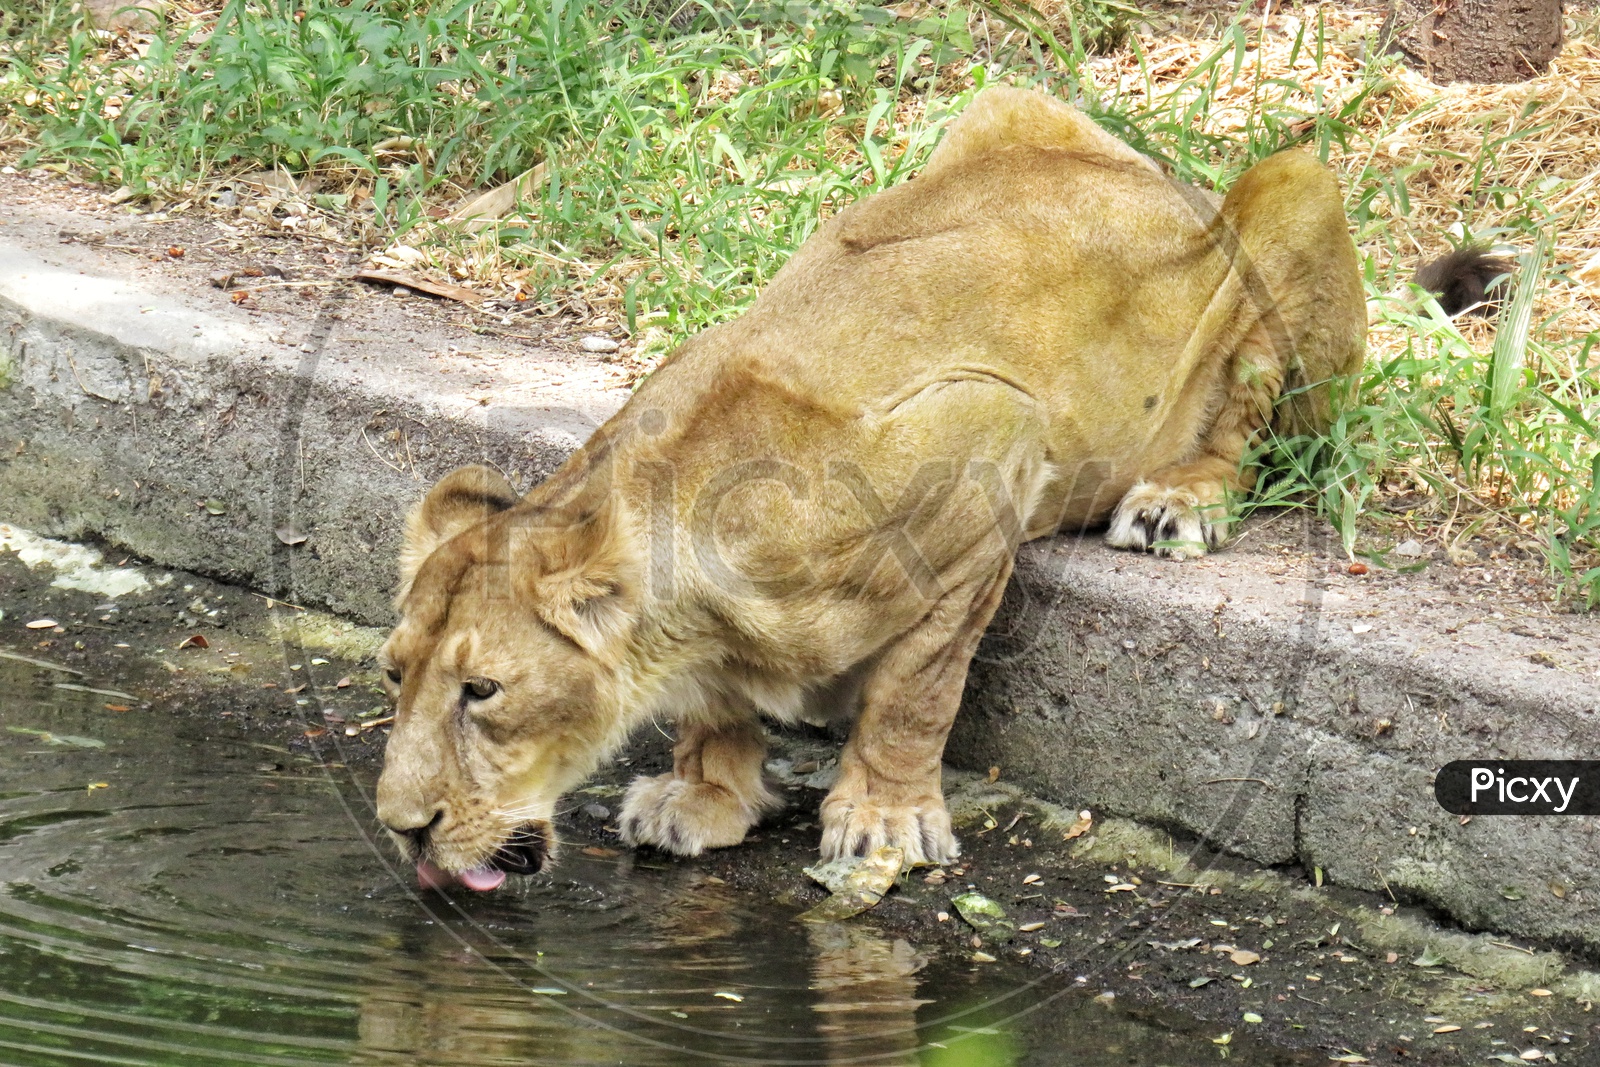 LION Drinking water